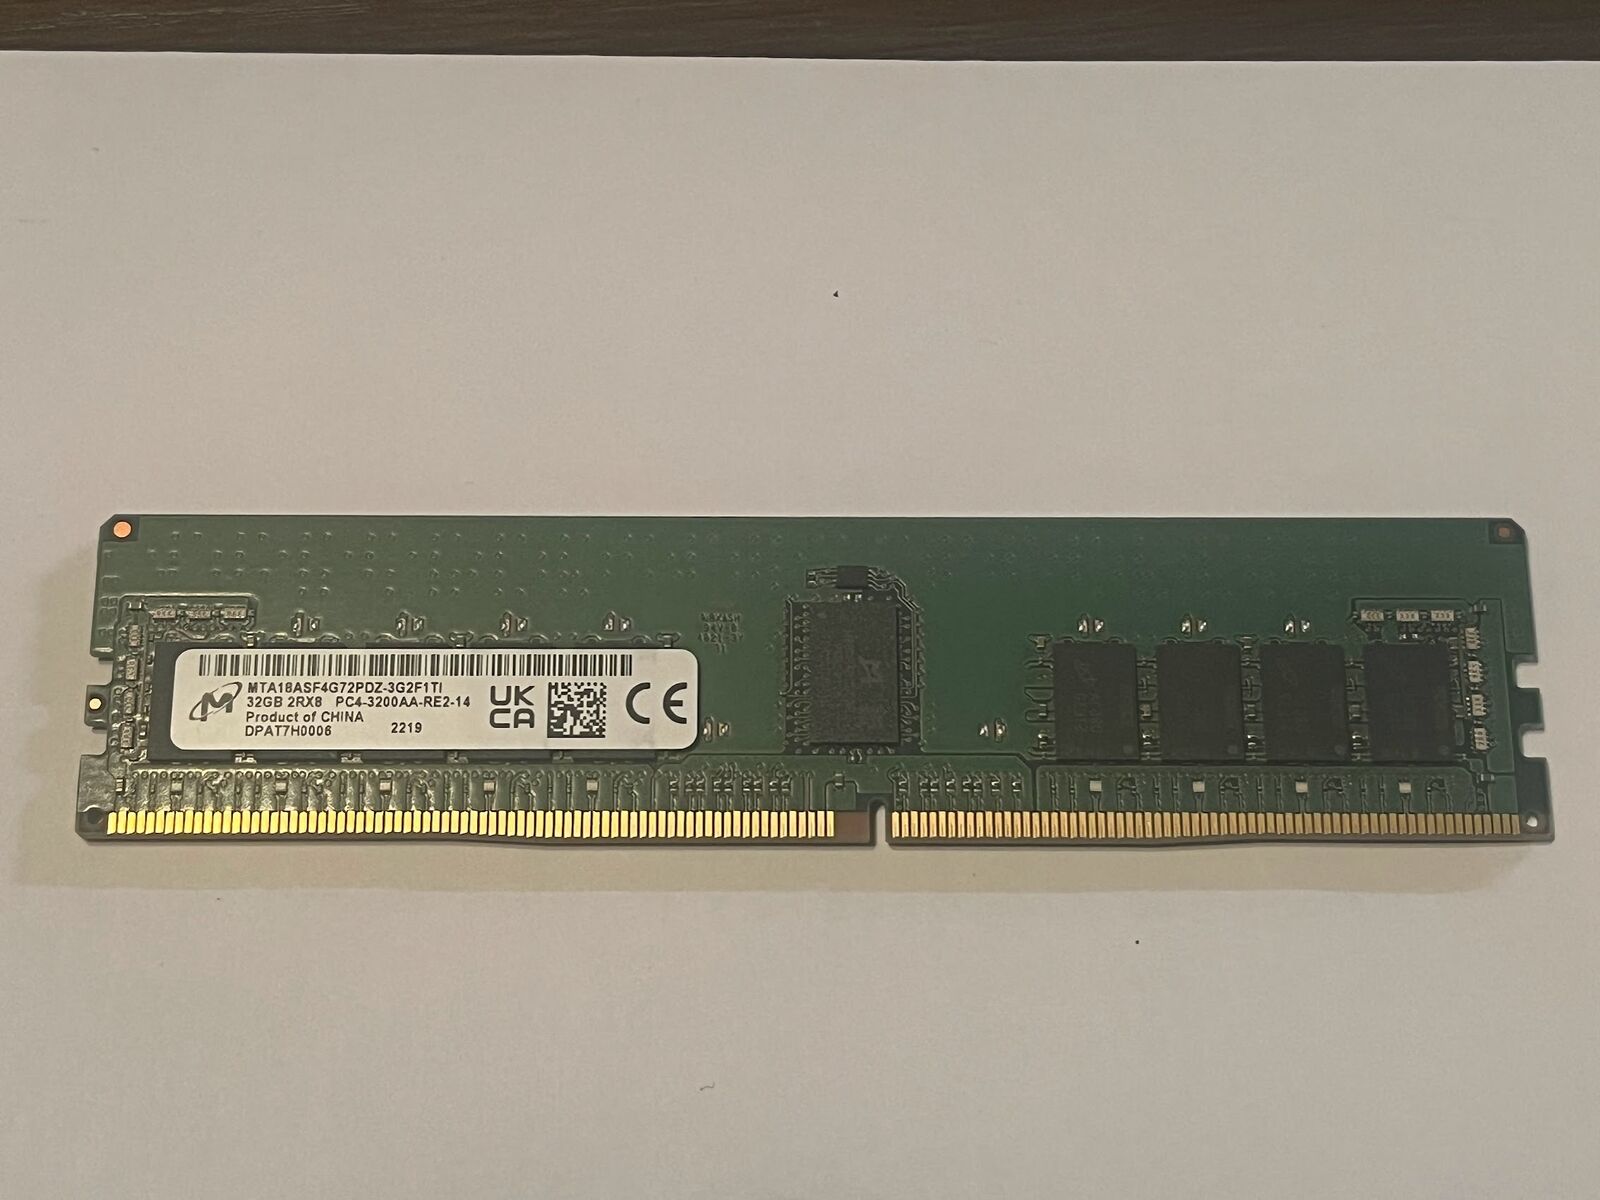 Micron 32GB (1X32GB) 2RX8 PC4-3200AA DDR4 Server Memory RAM MTA18ASF4G72PDZ-3G2